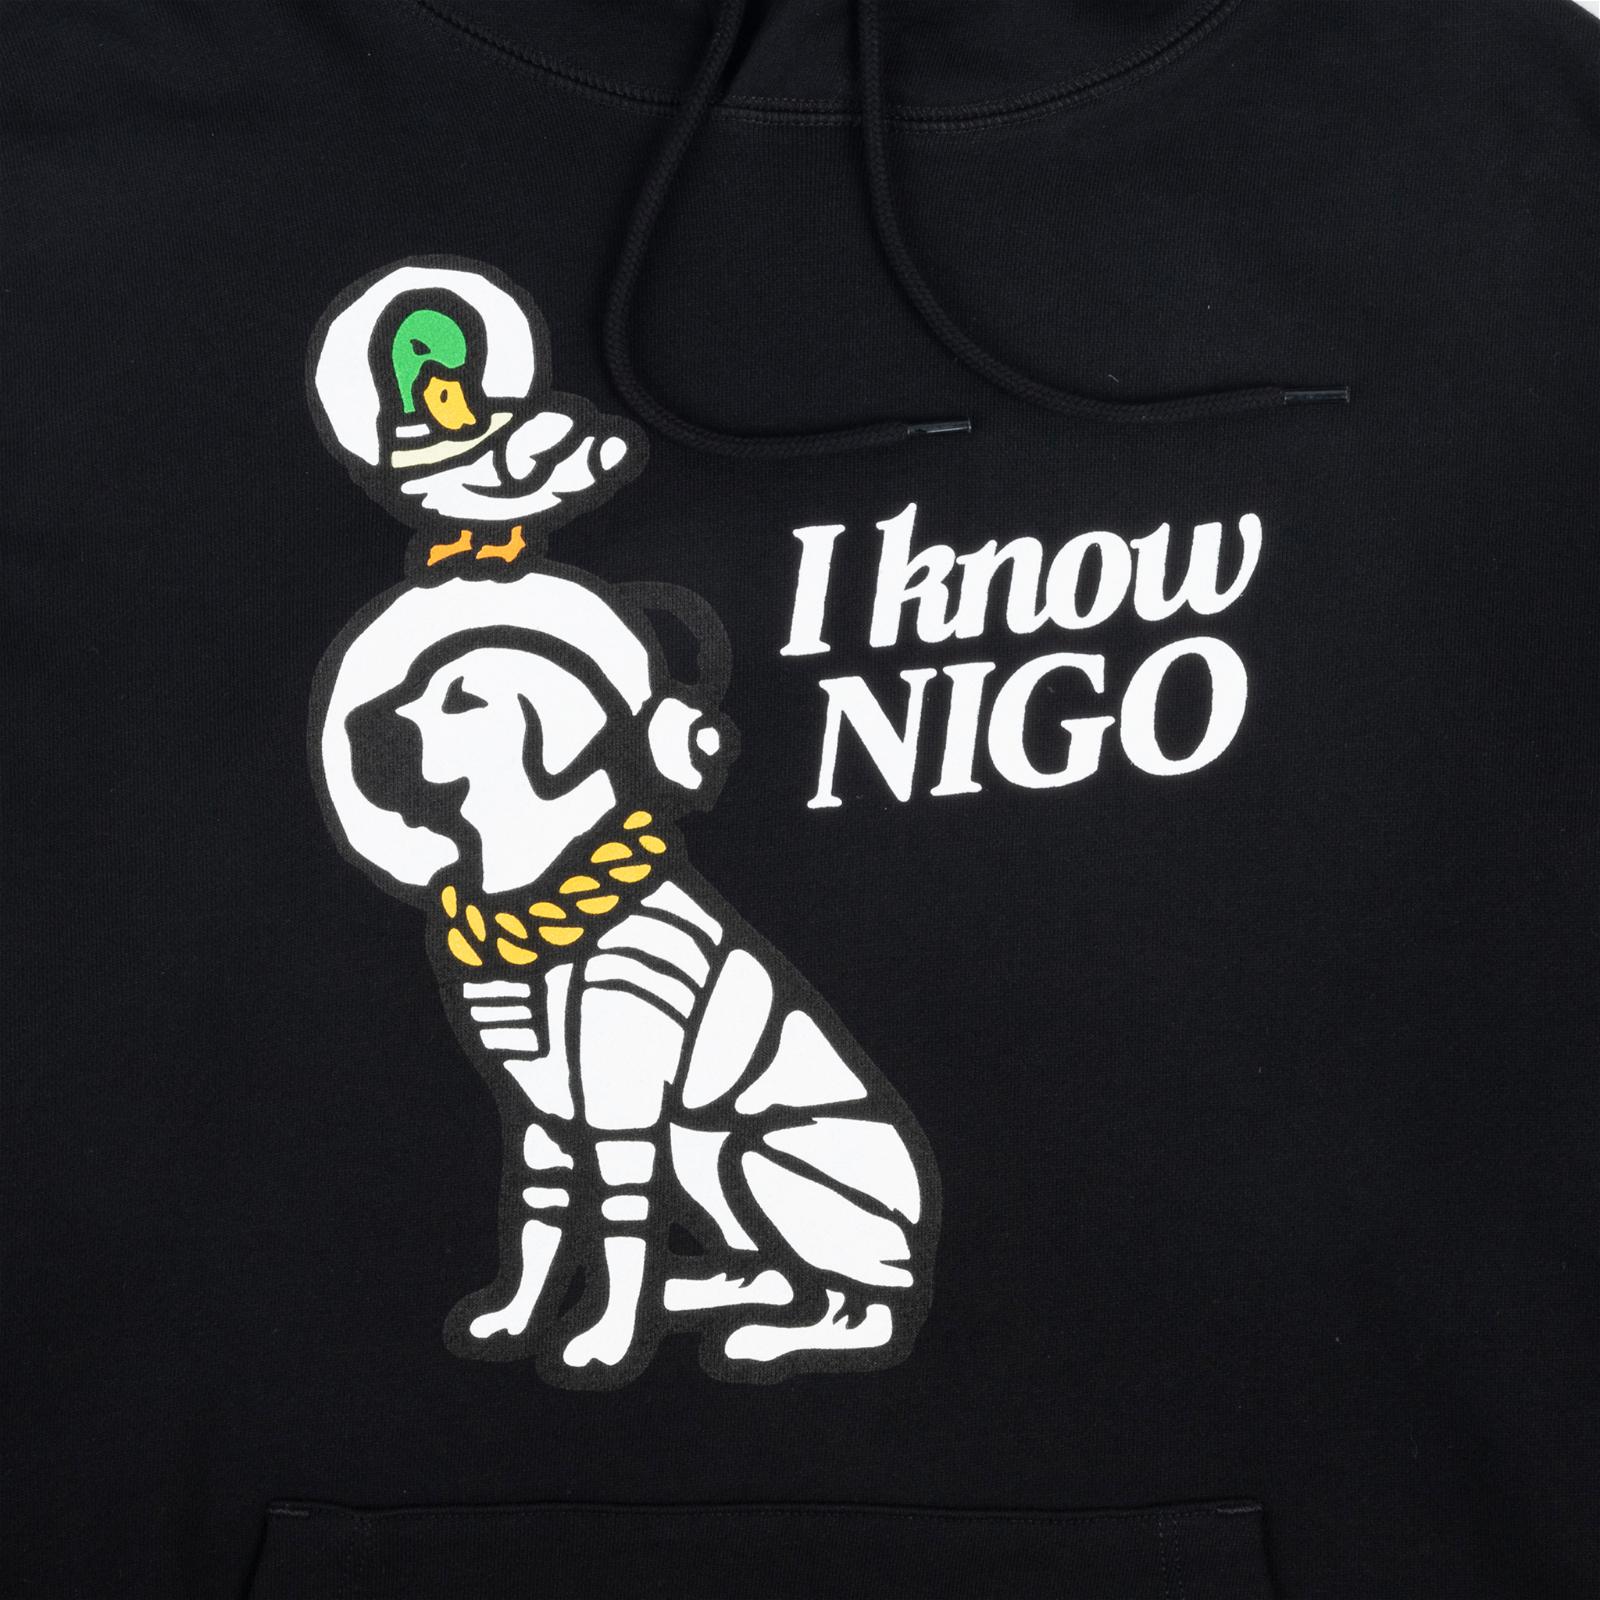 I KNOW NIGO Album Merch by Billionaire Boys Club x Human Made